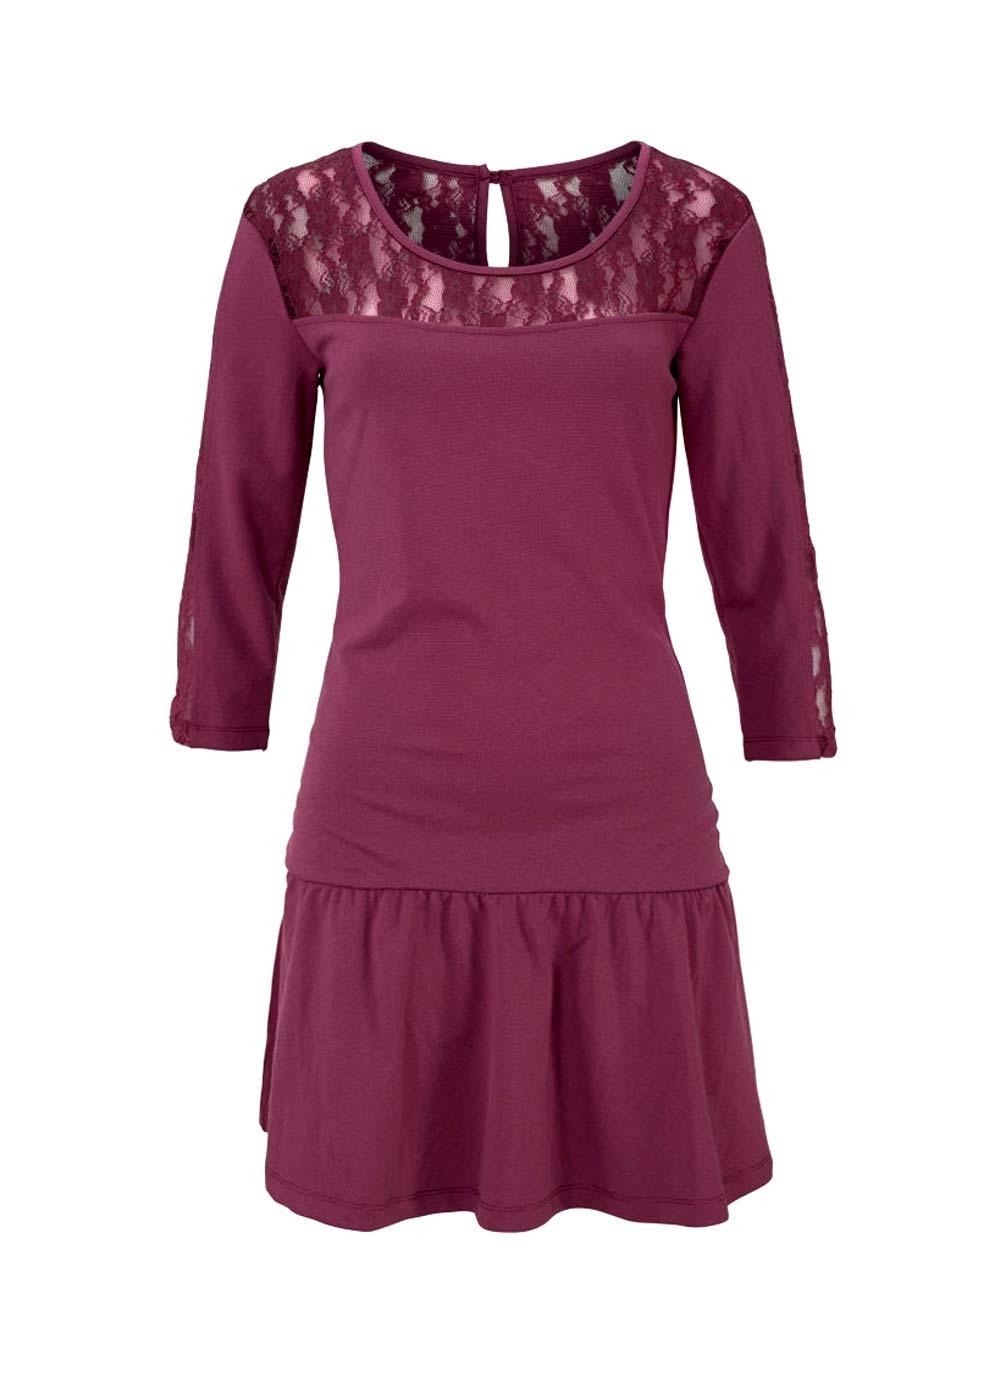 Formal Einfach Bordeaux Kleid Spitze Design15 Elegant Bordeaux Kleid Spitze Boutique